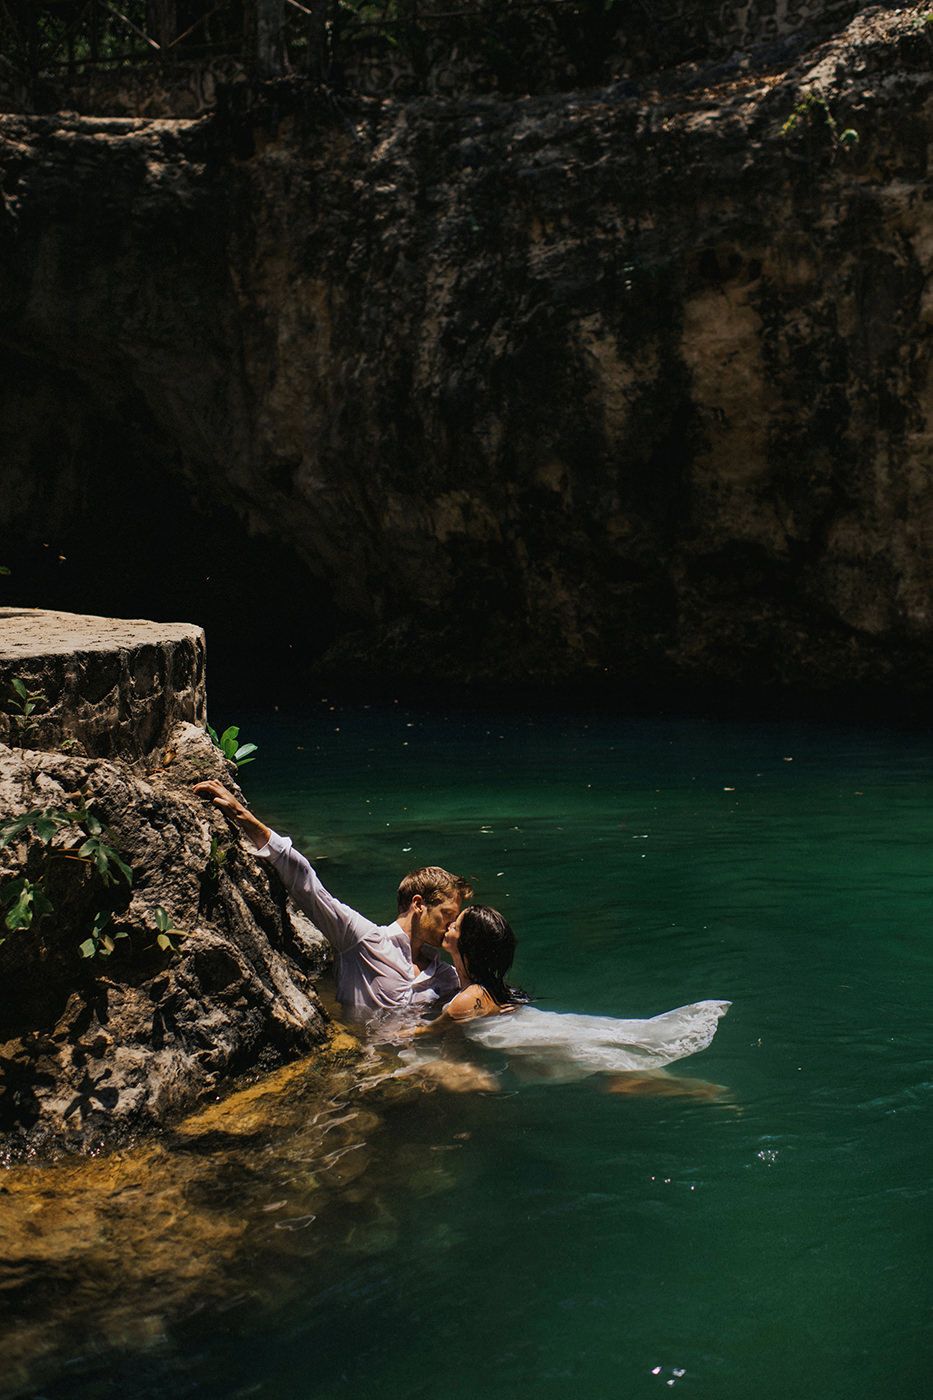 Adventurous cancun wedding photo in a cenotes